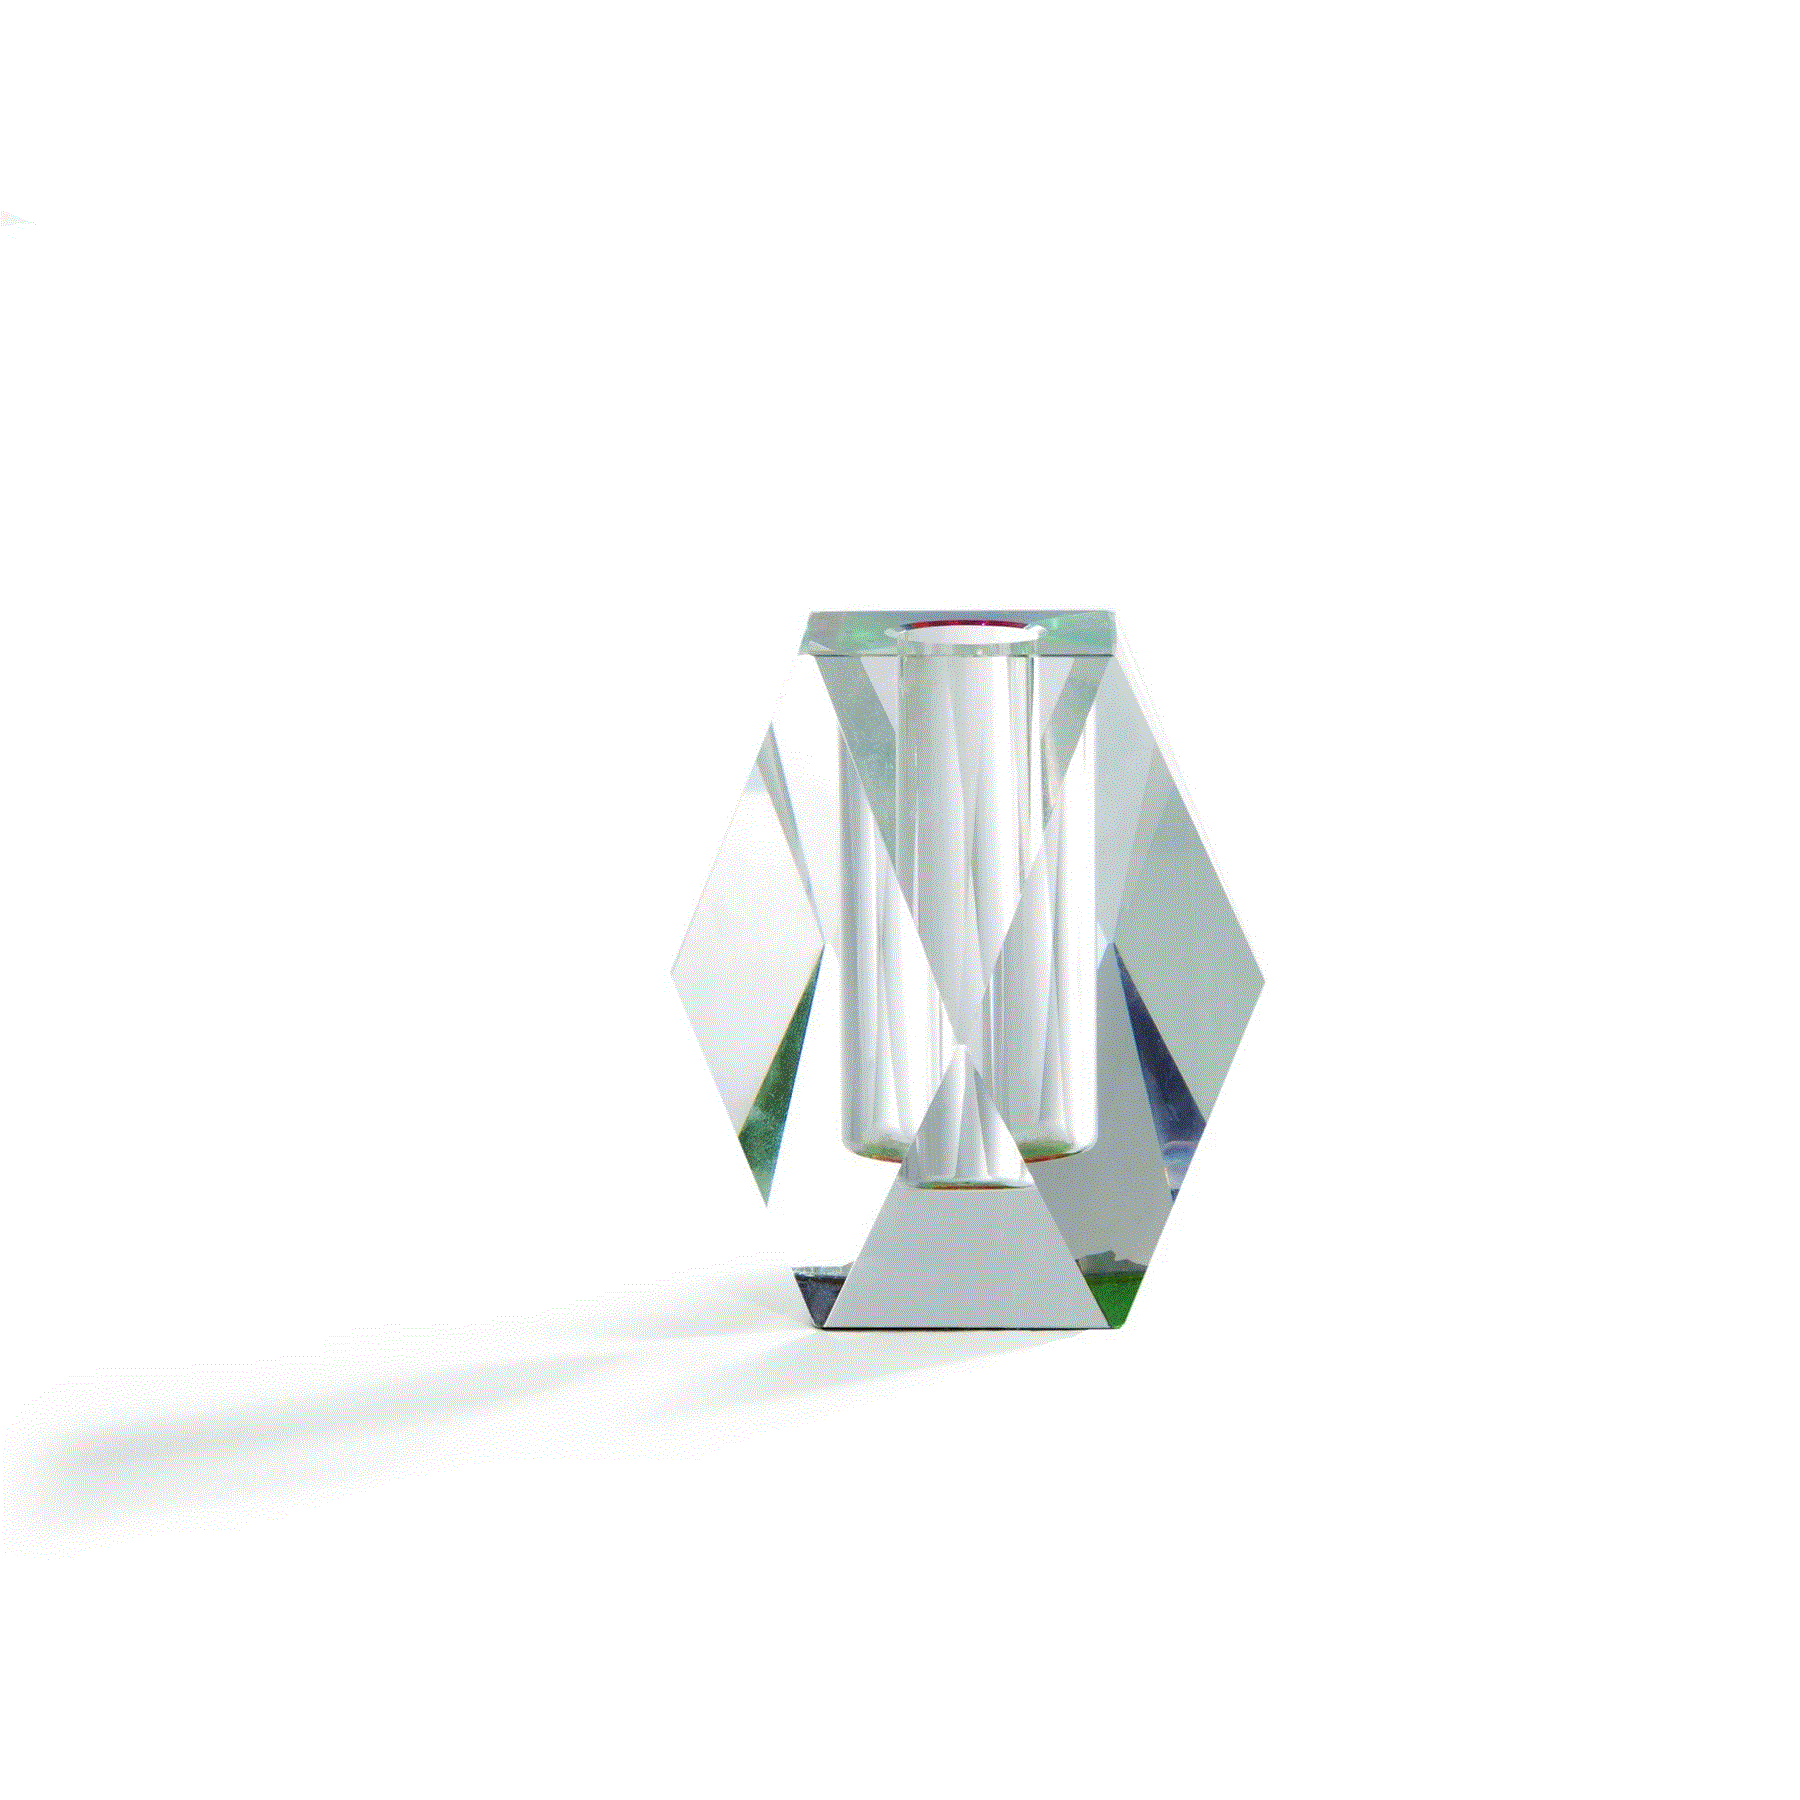 Vase; Regenbogen Vase klein; Kristallglas; klar, regenbogenfarben; 6.5 x 3.5 x 3.5; Fundamental Berlin